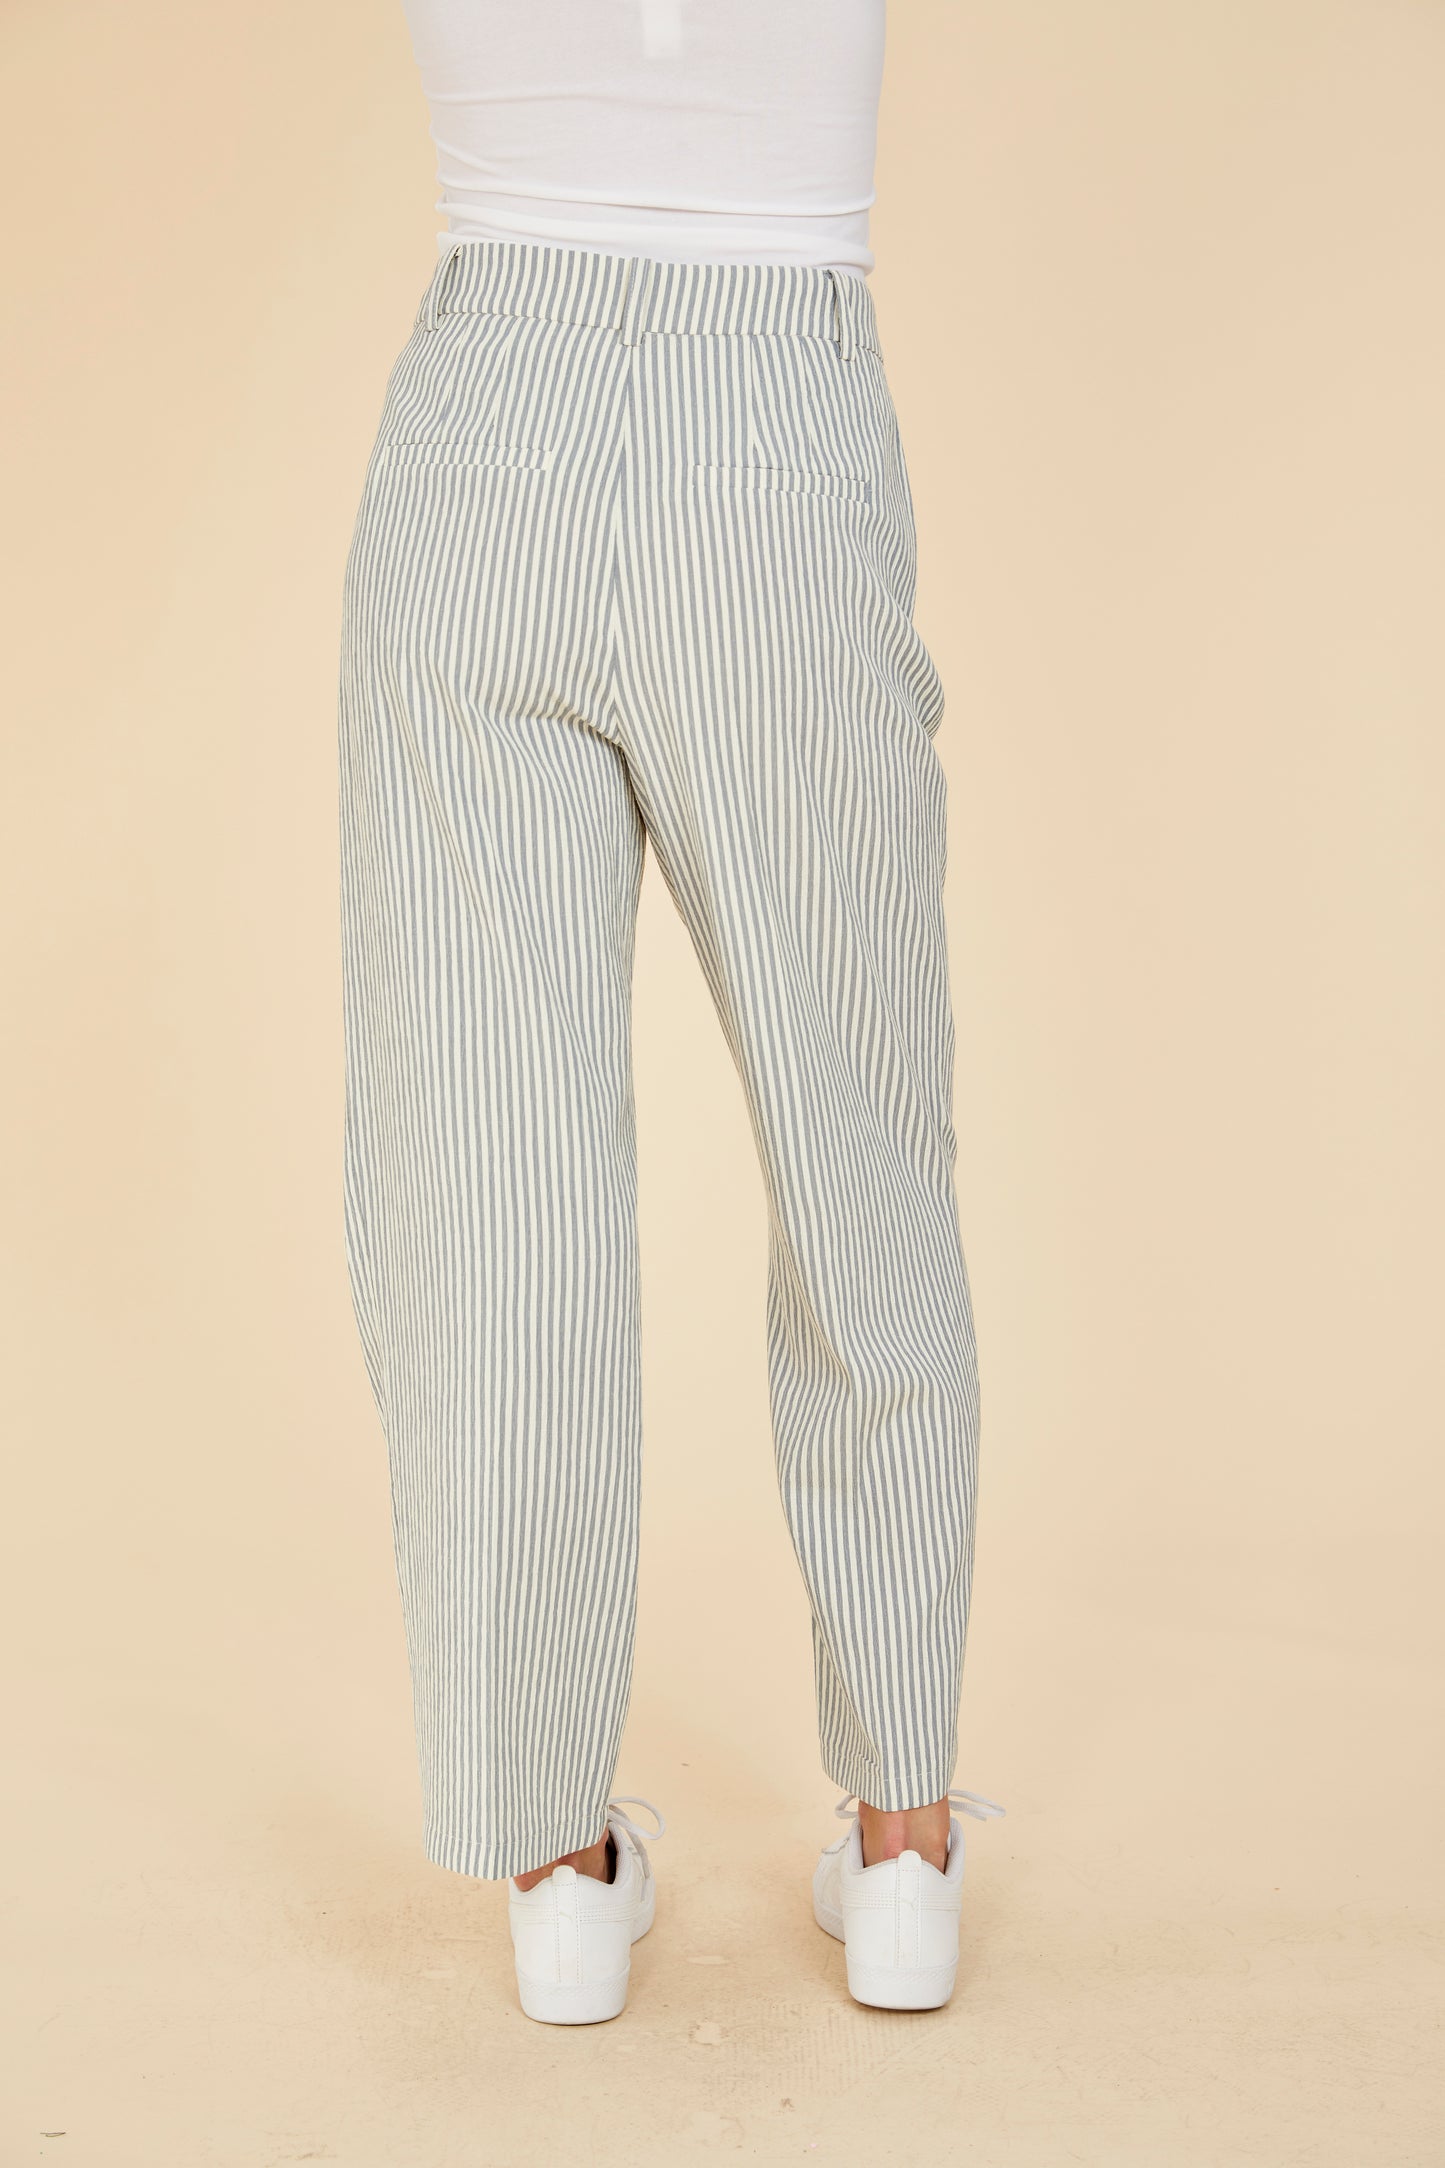 Striped Seer Sucker Pants